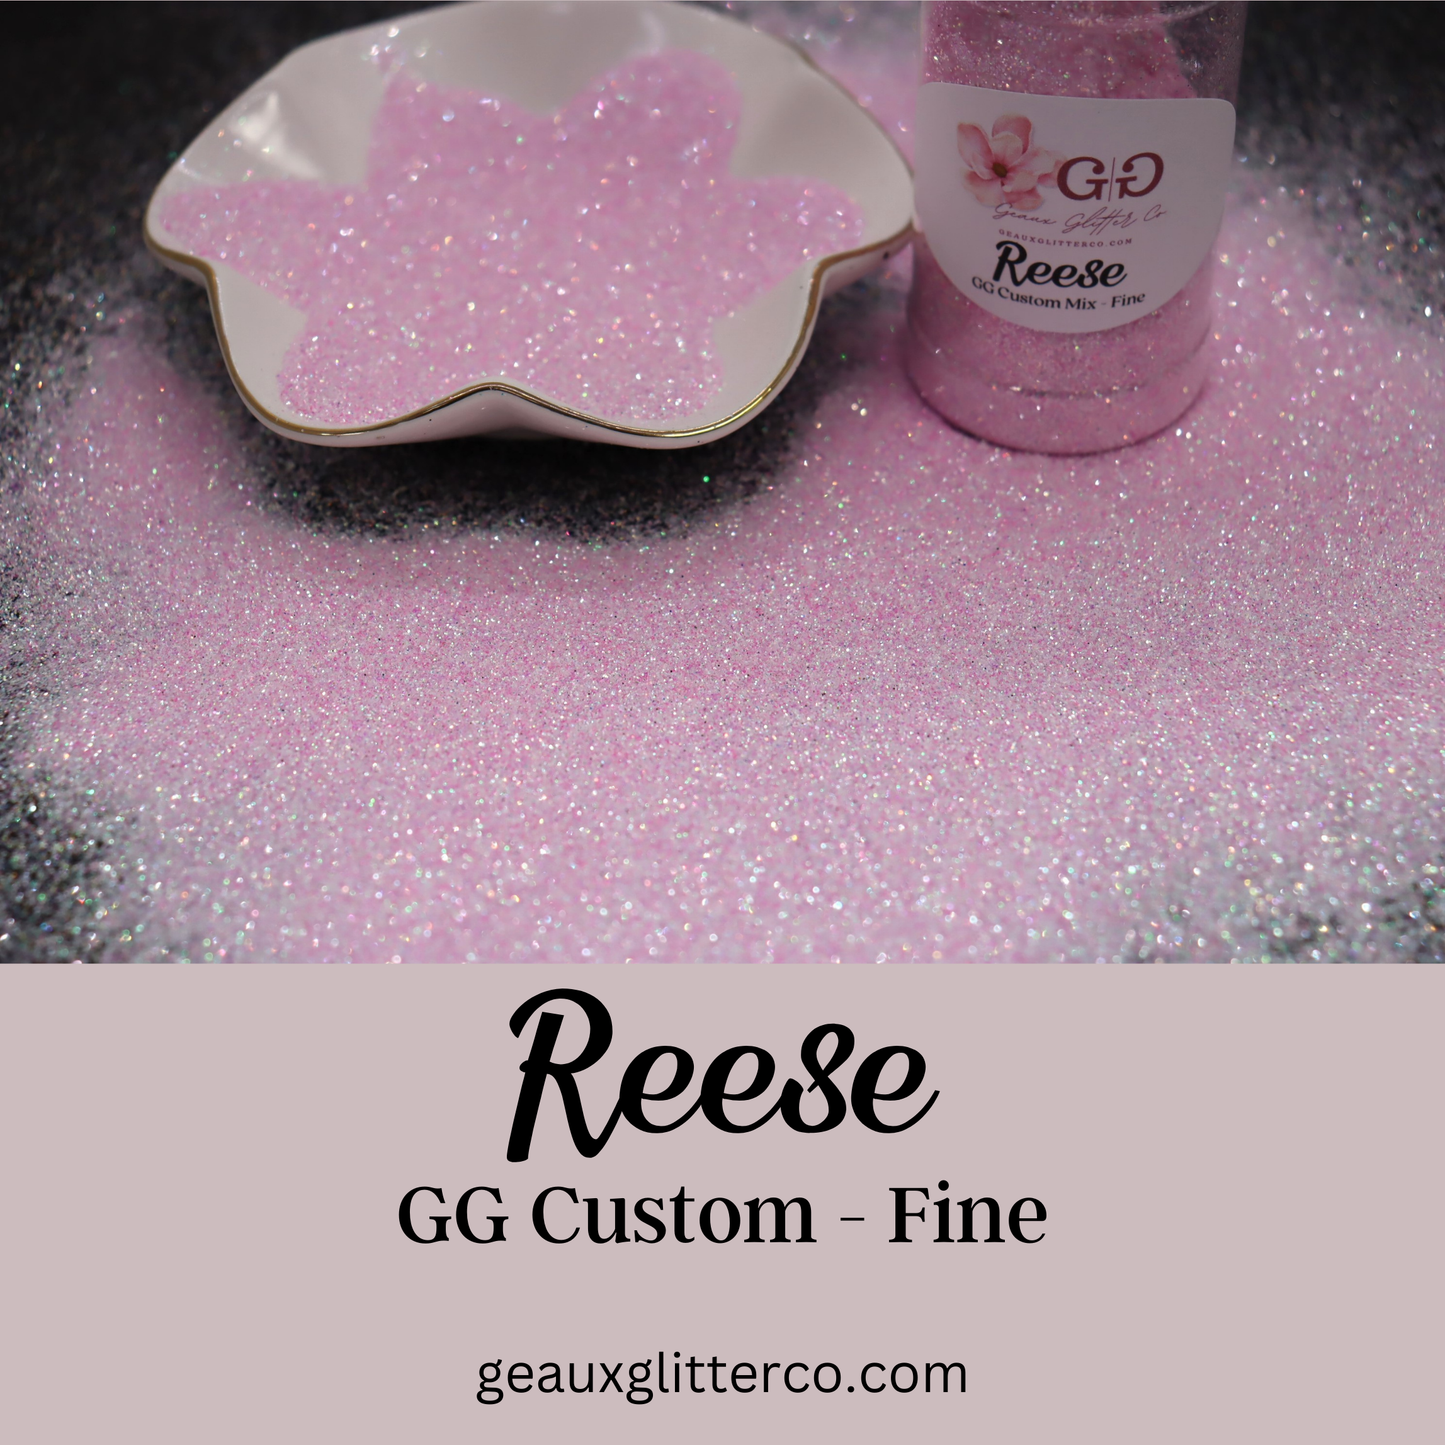 Reese - GG Custom Mix - Fine